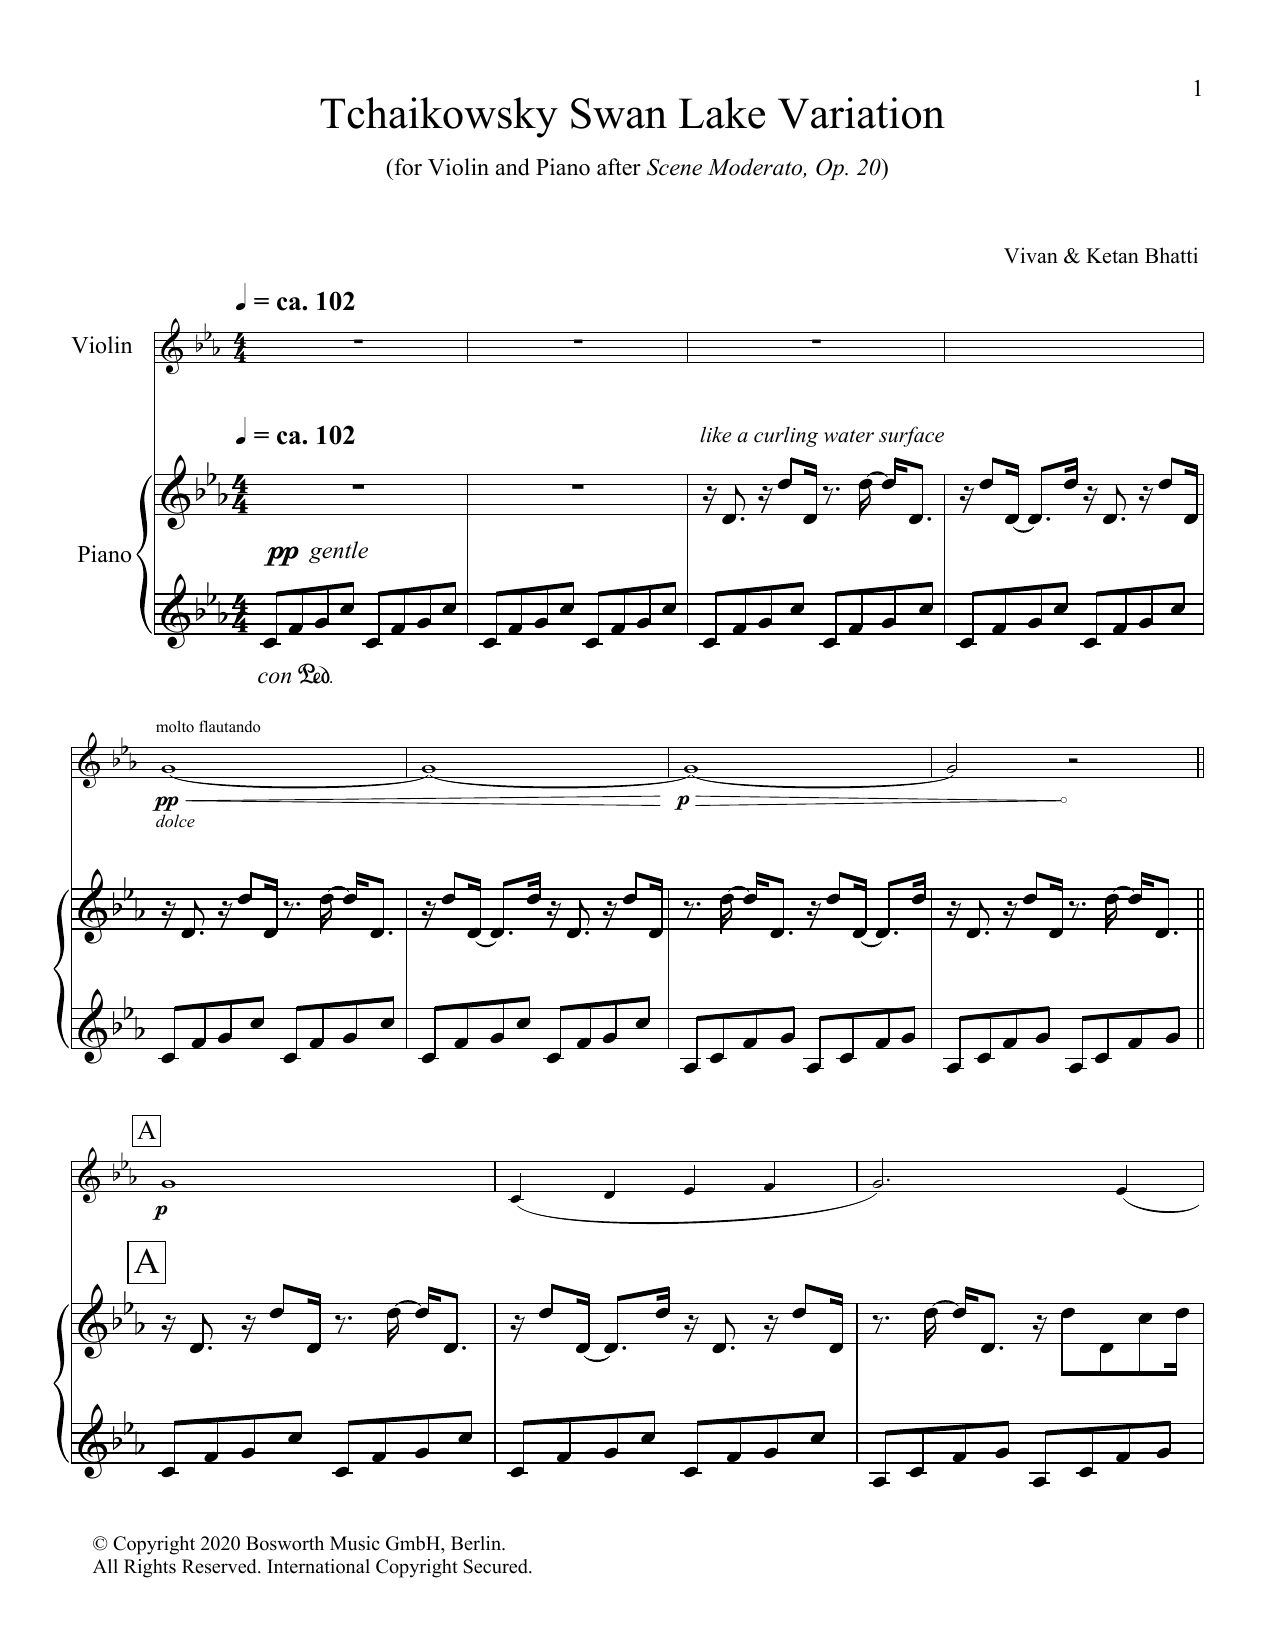 Vivan & Ketan Bhatti Tchaikowsky Swan Lake Variation Sheet Music Notes & Chords for Violin and Piano - Download or Print PDF